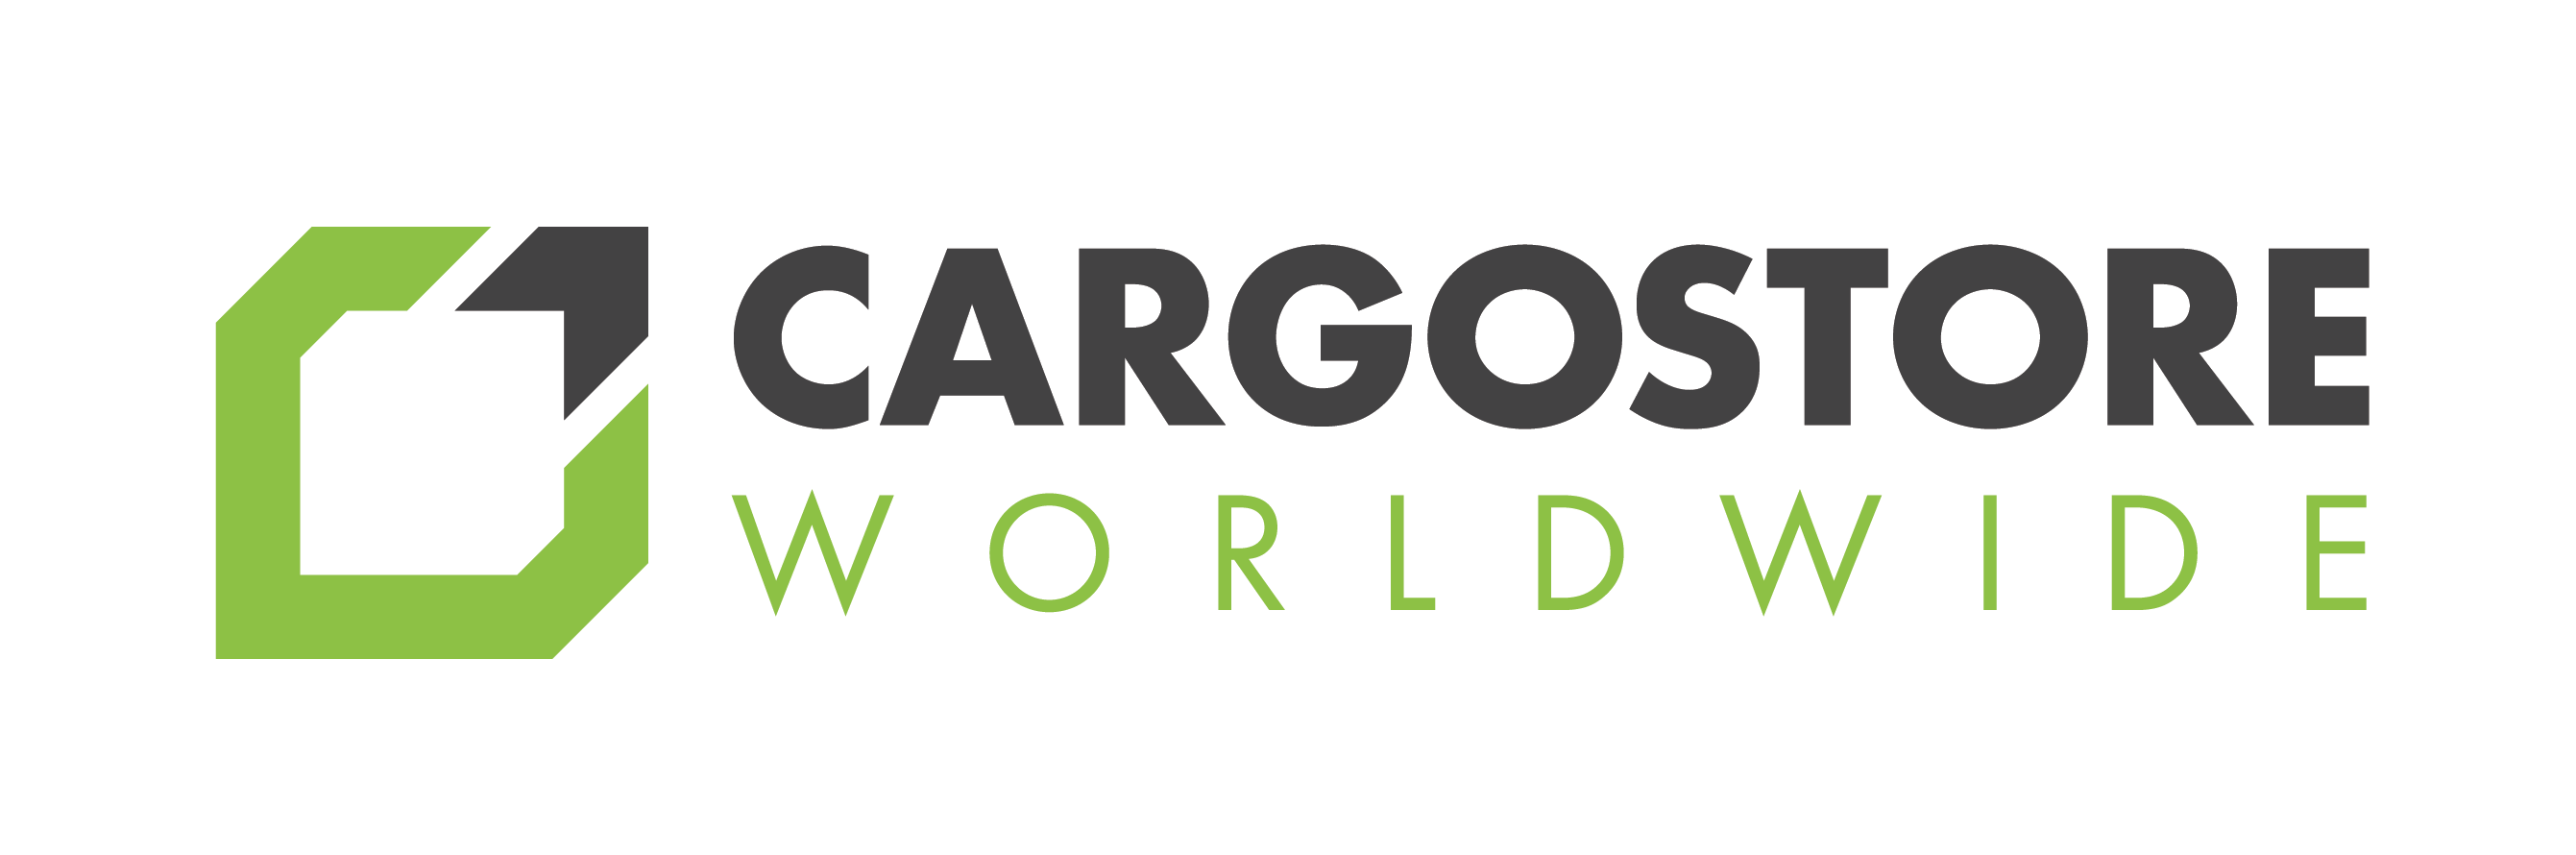 Cargostore Logo NEW